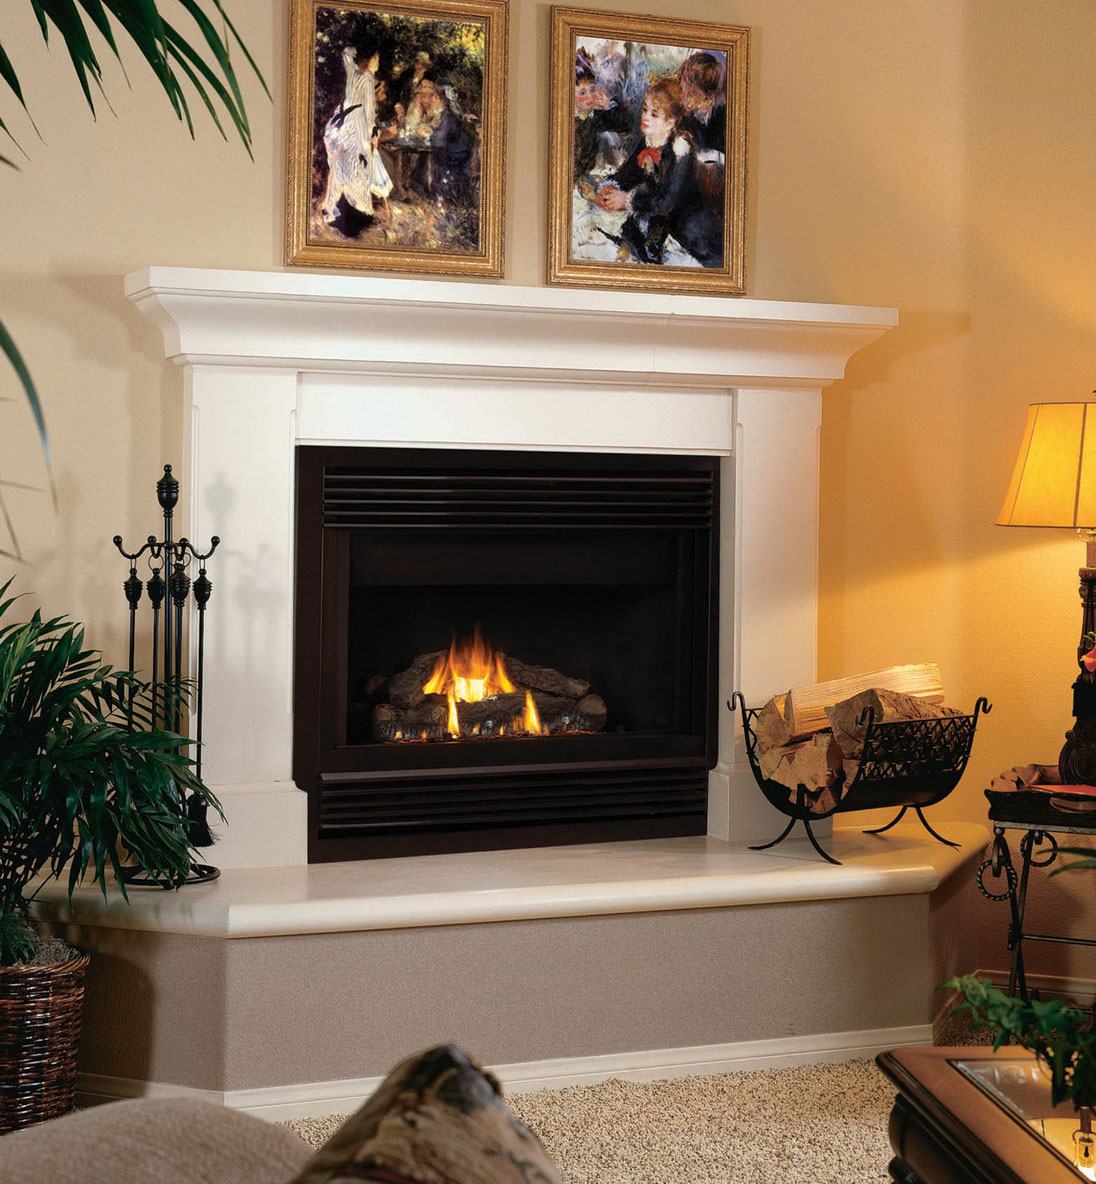 Unique Fireplace Mantel Designs And Ideas Decor Or Design,Line Art Black And White Simple Flower Design